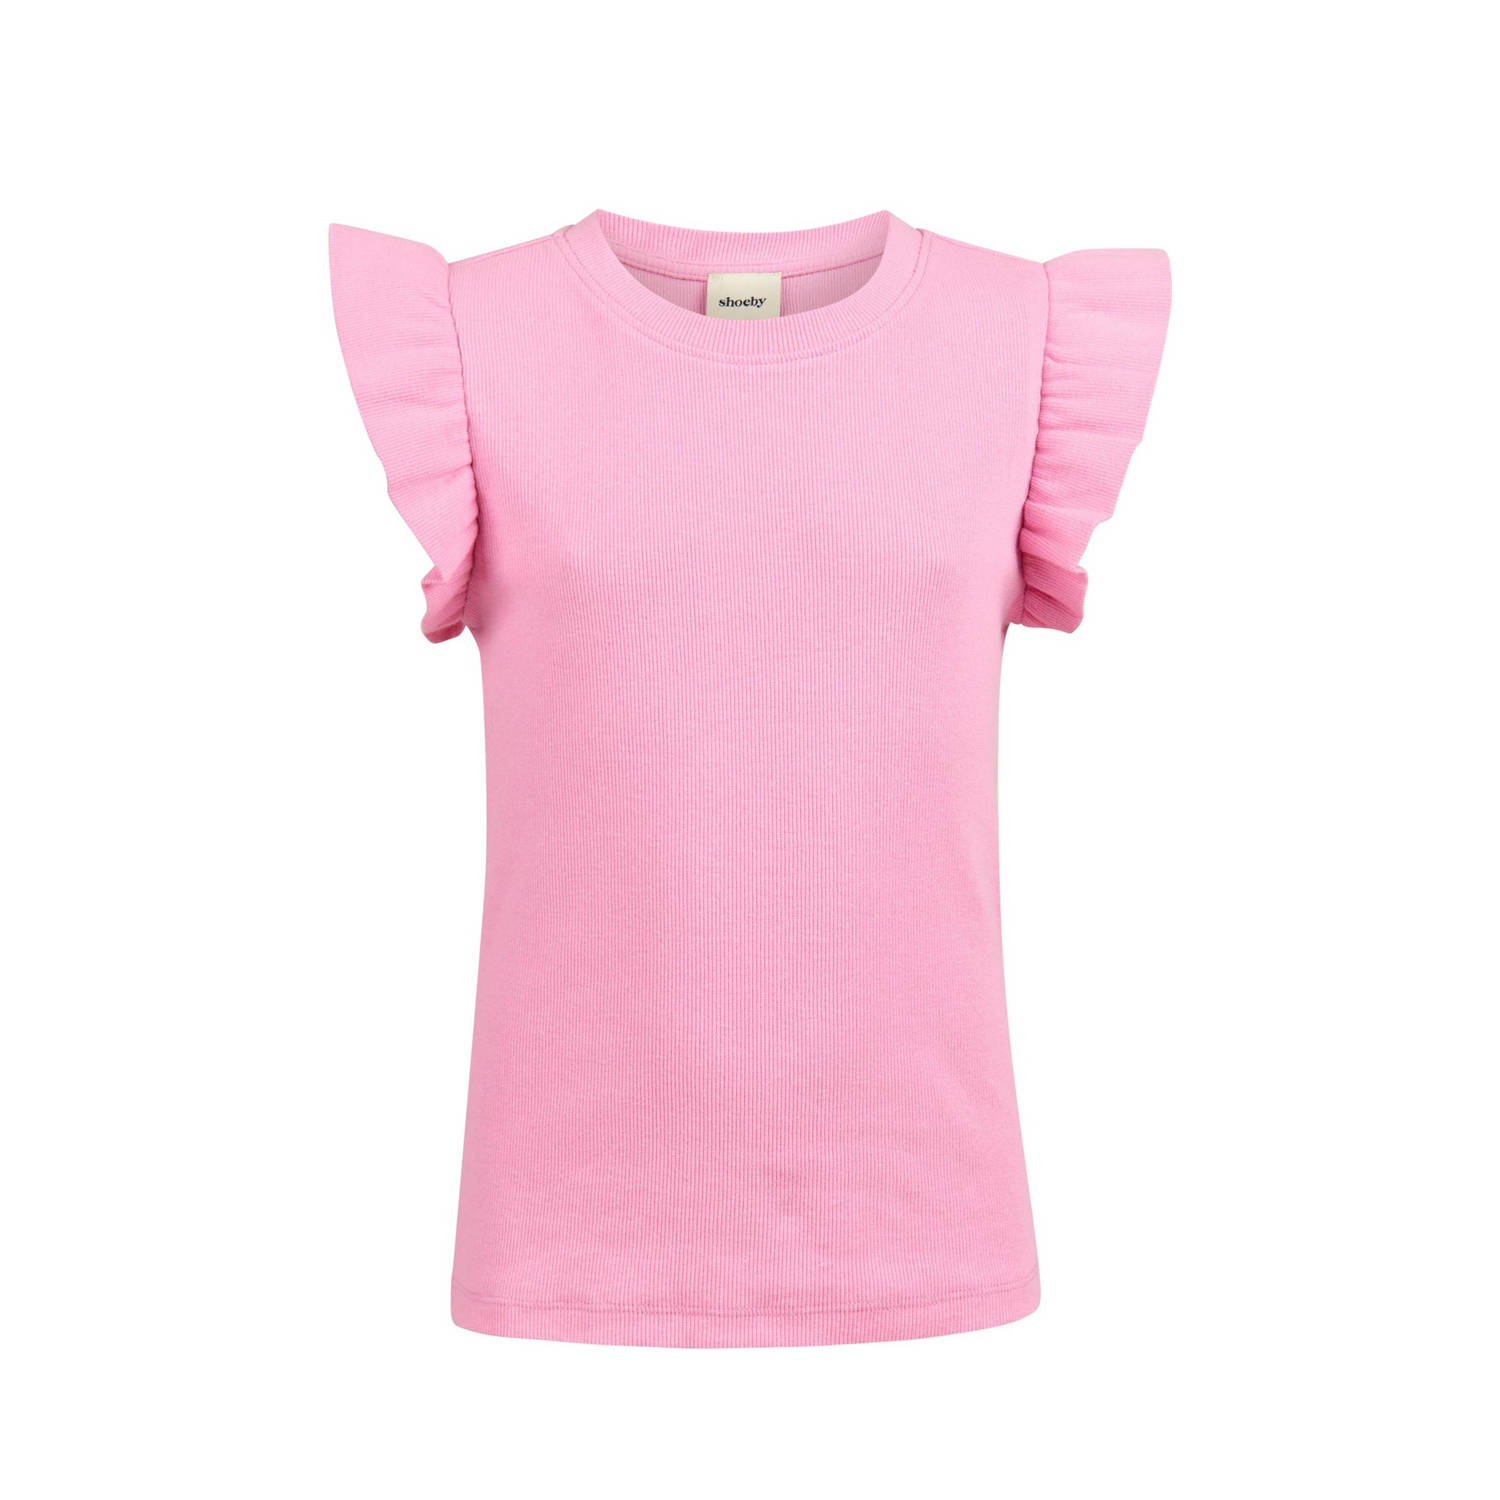 Shoeby T-shirt met ruches roze